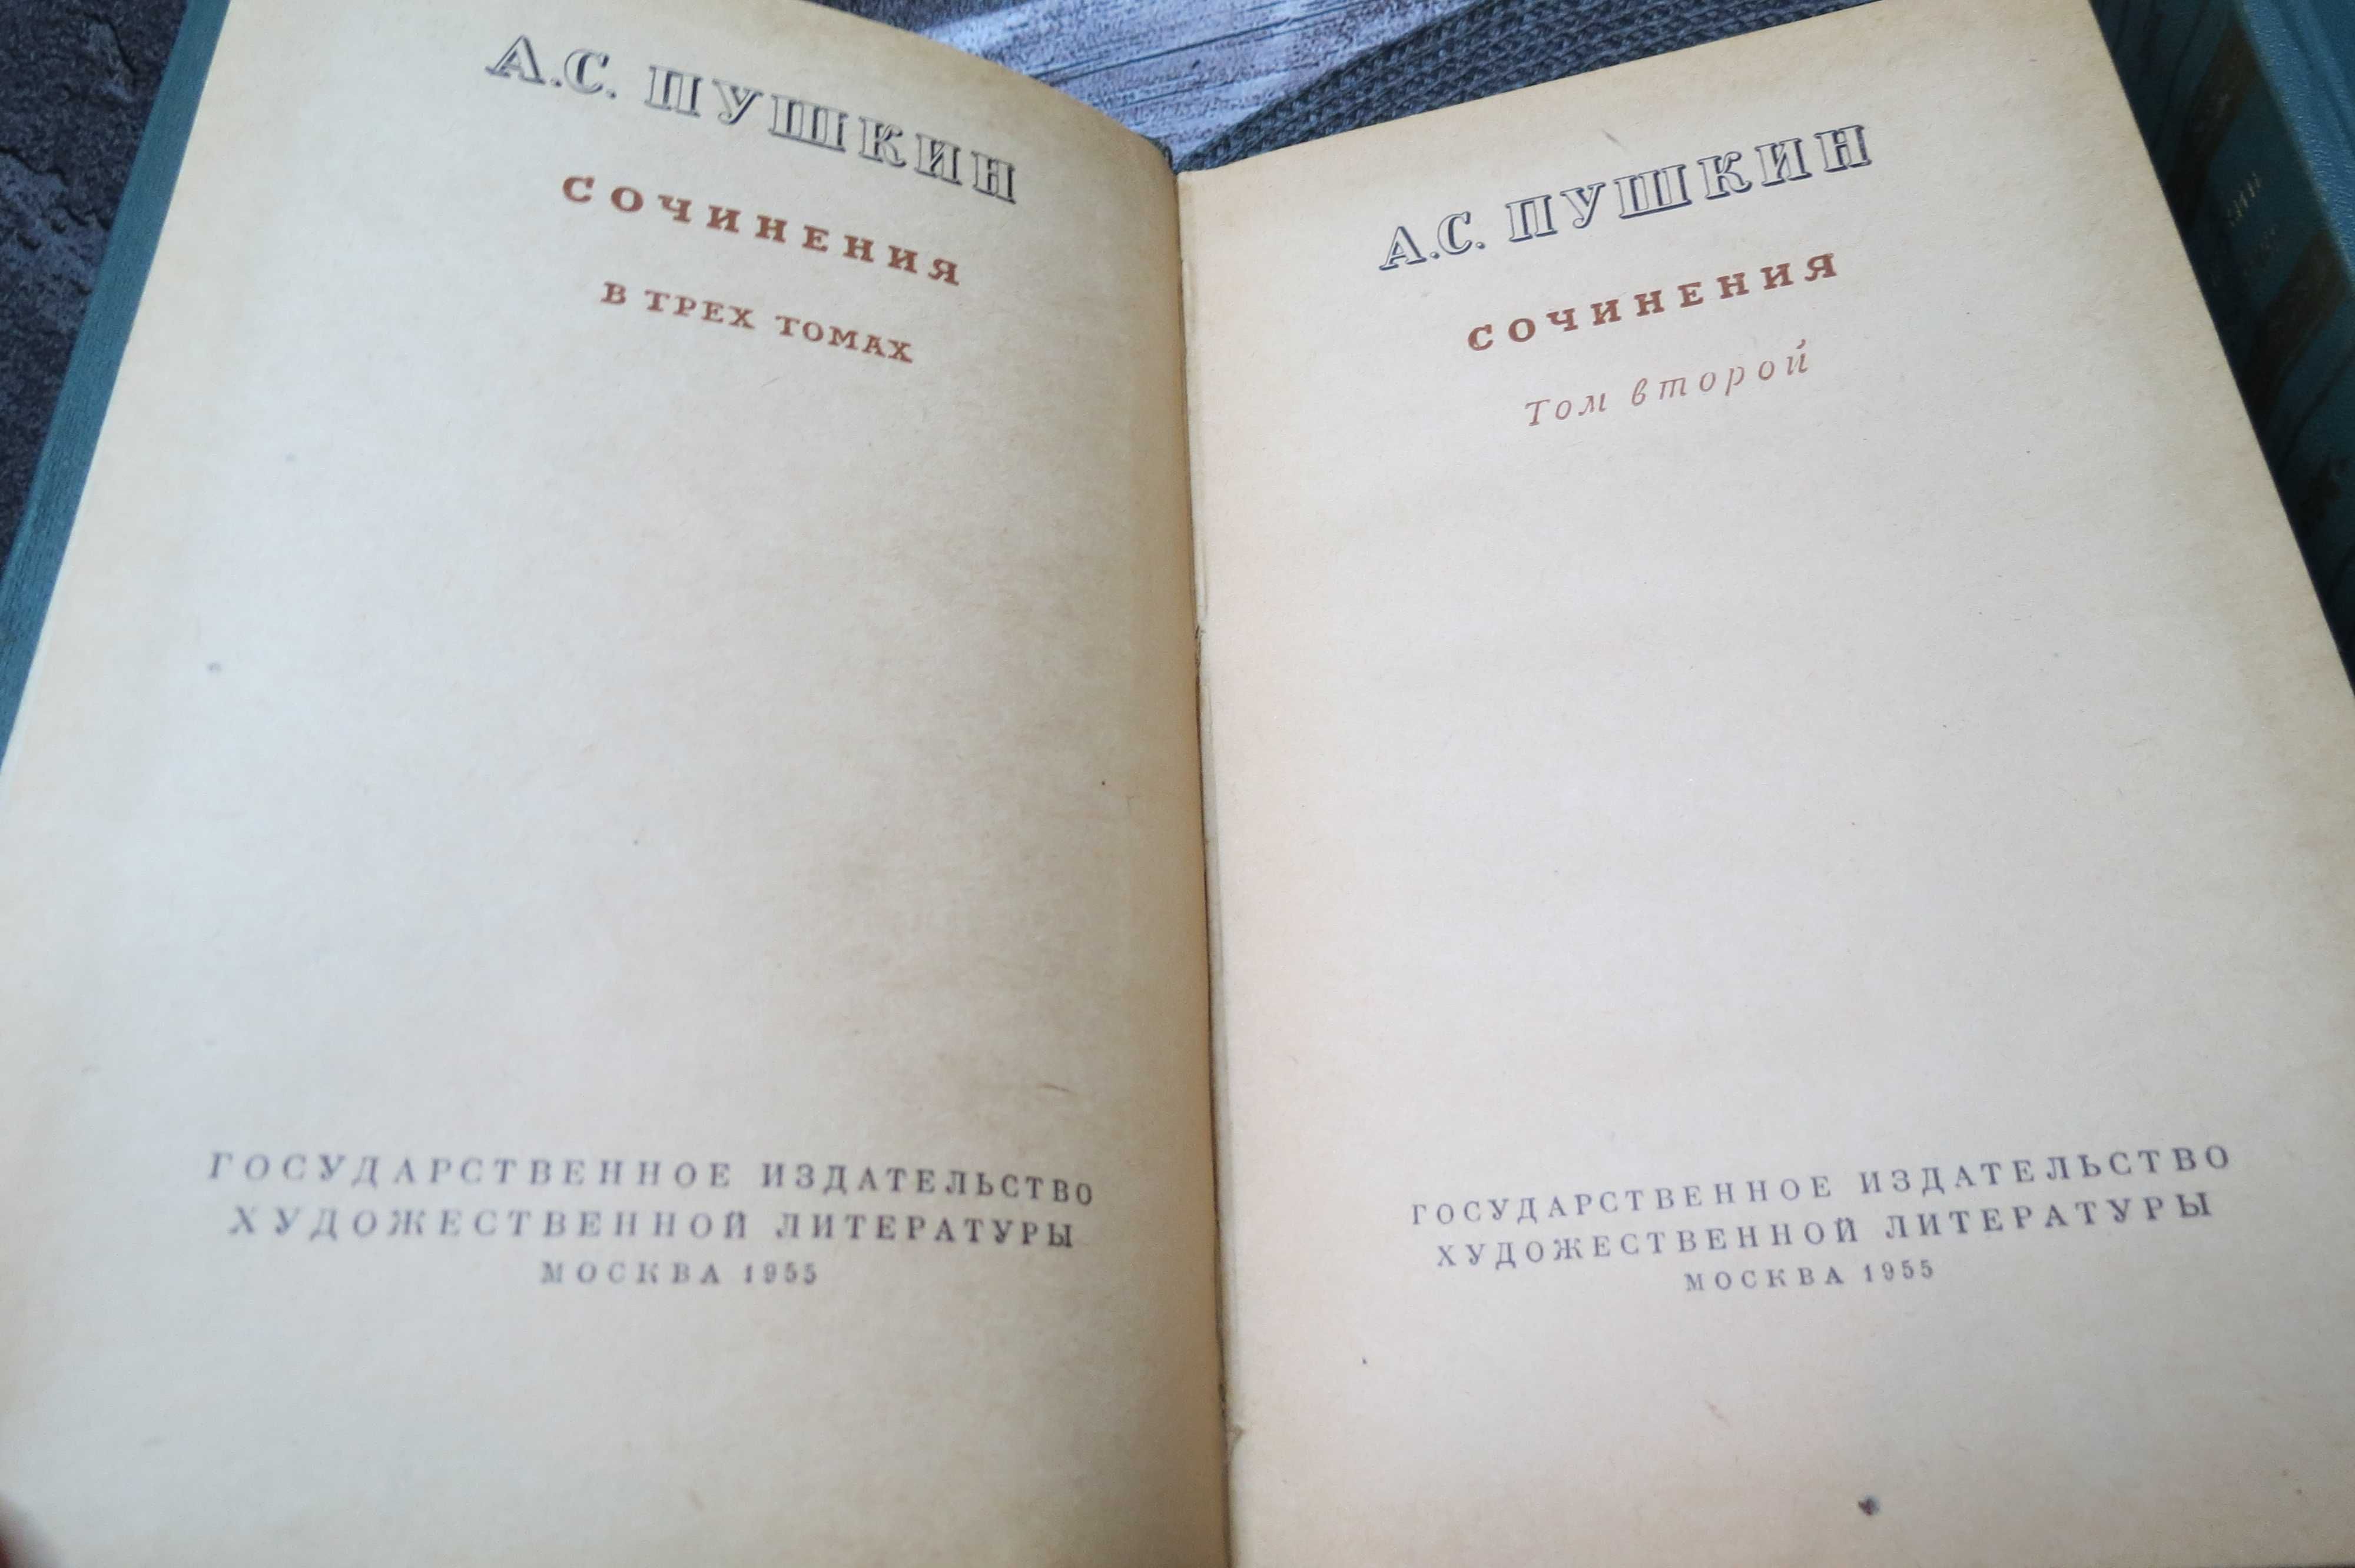 А.С. Пушкин Собрание сочинений в 3-х томах